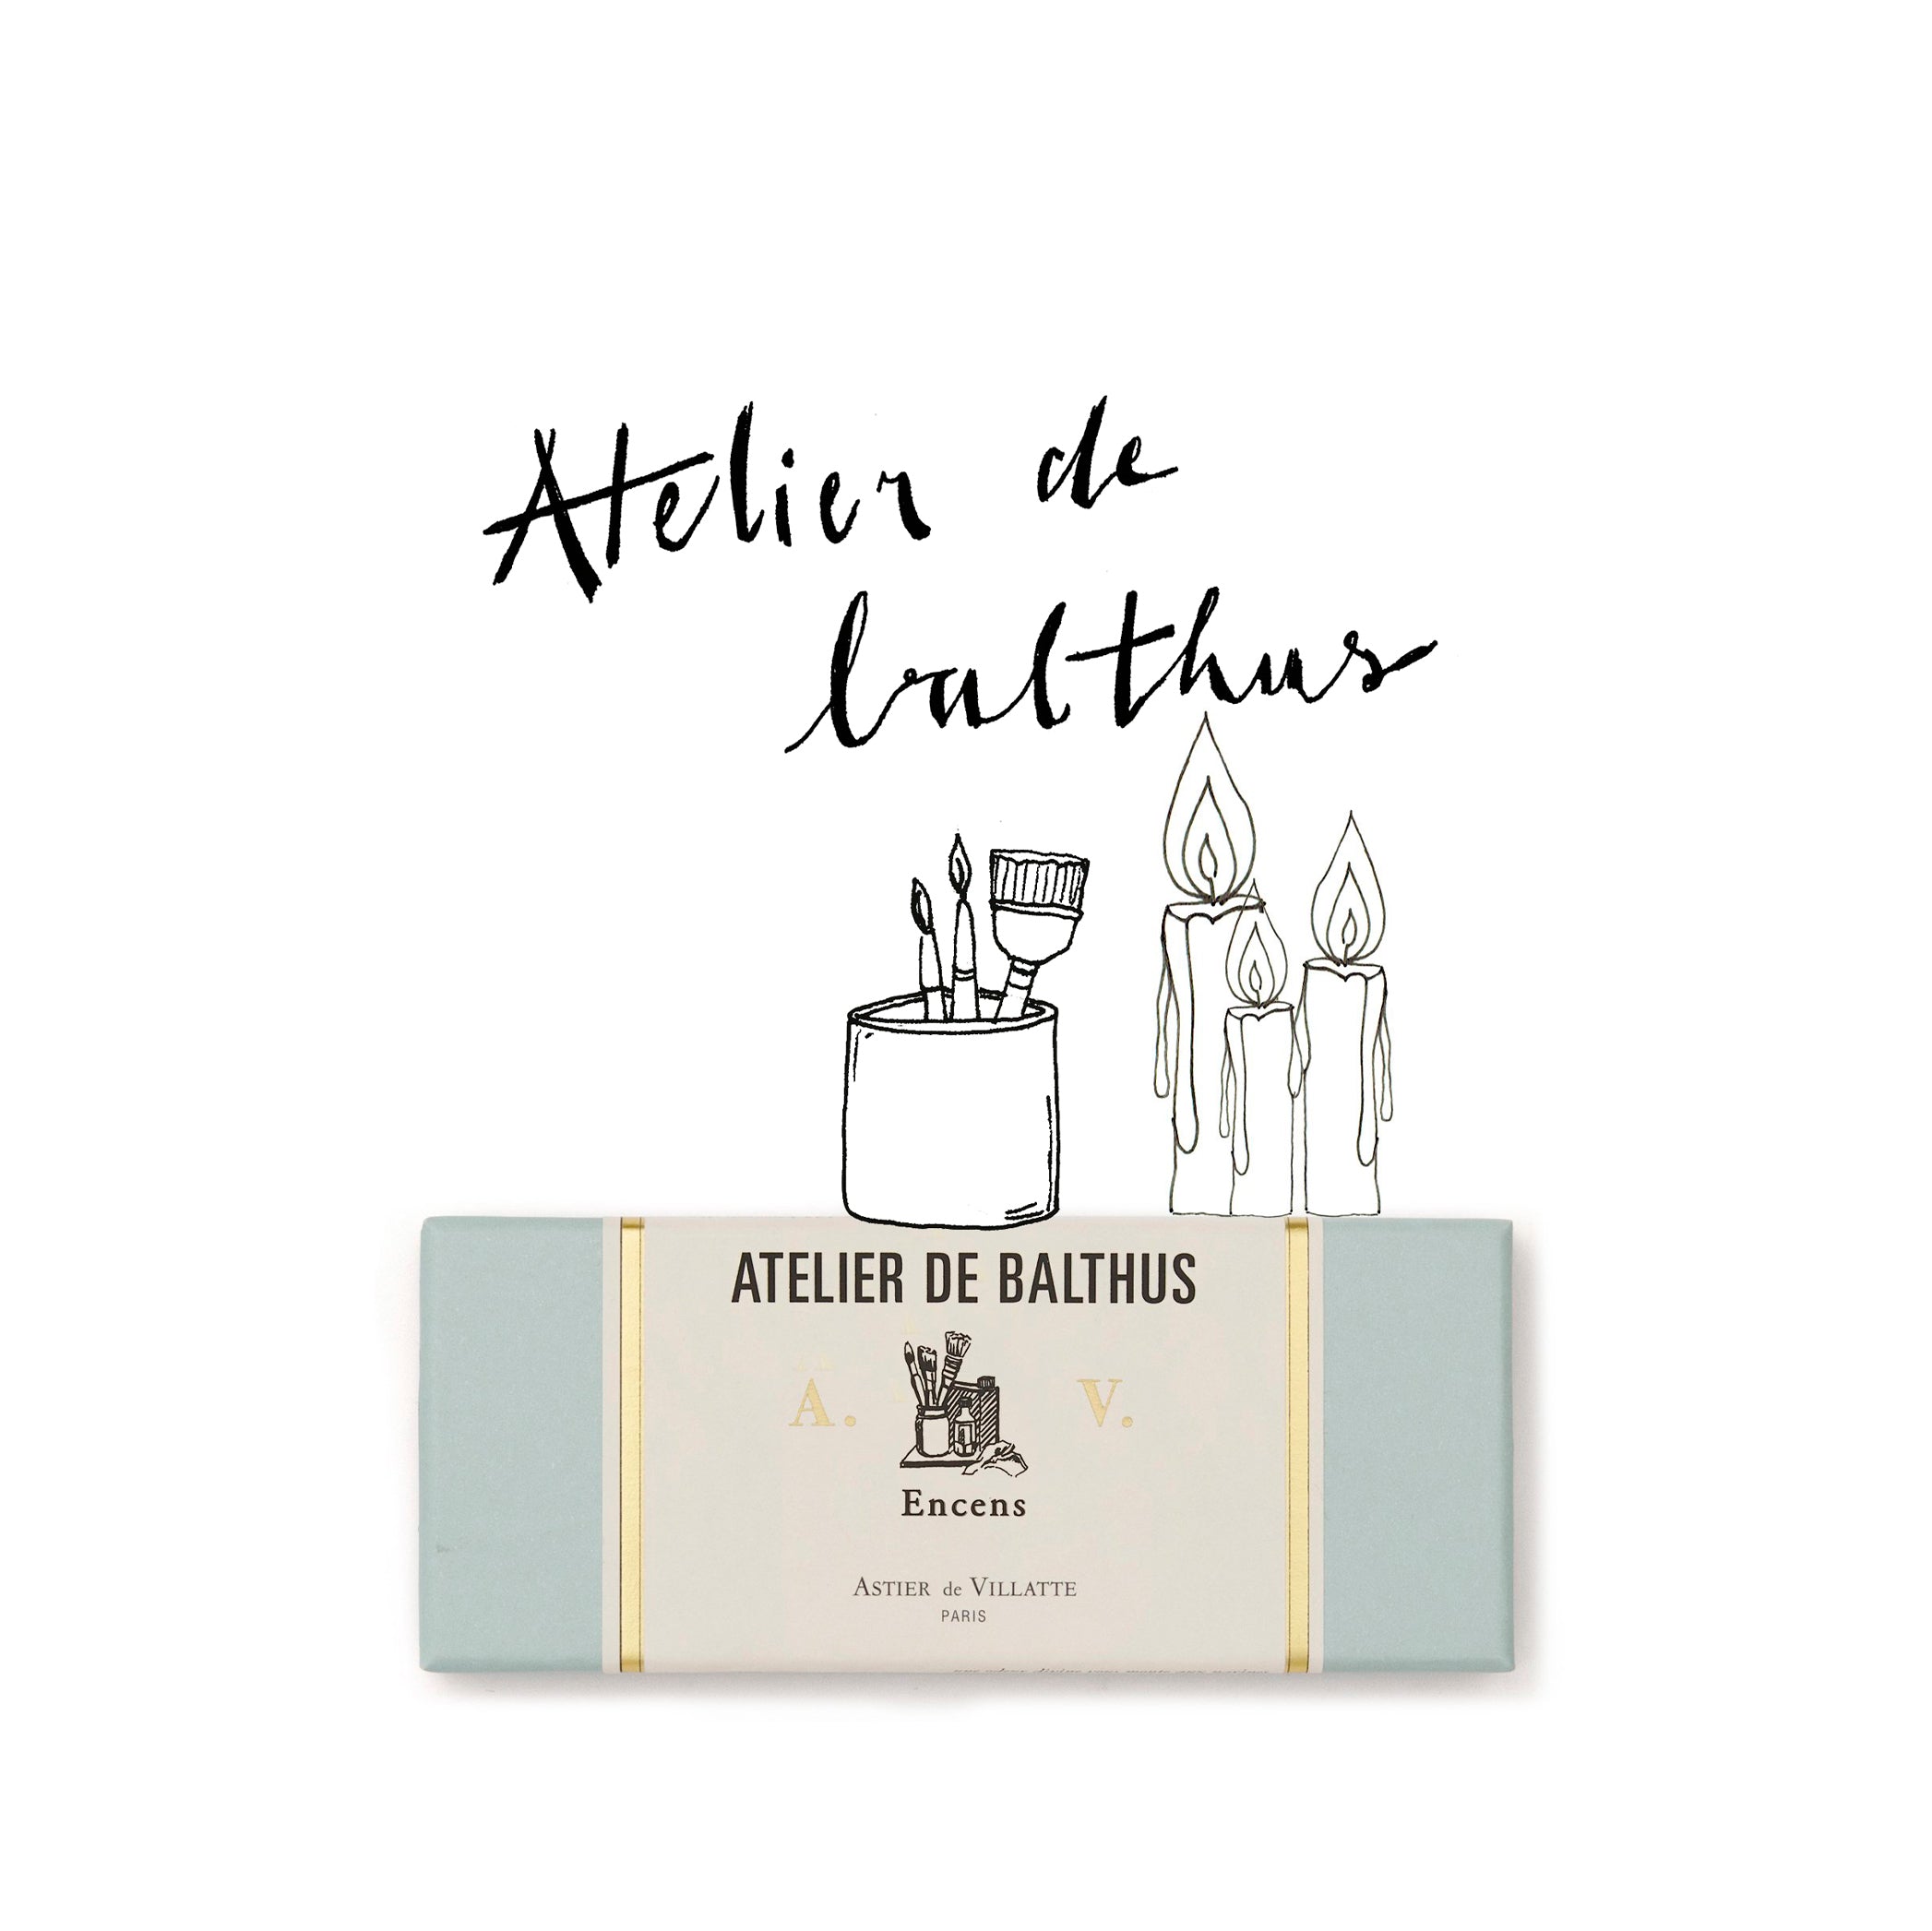 Atelier de Balthus Incense by Astier de Villatte